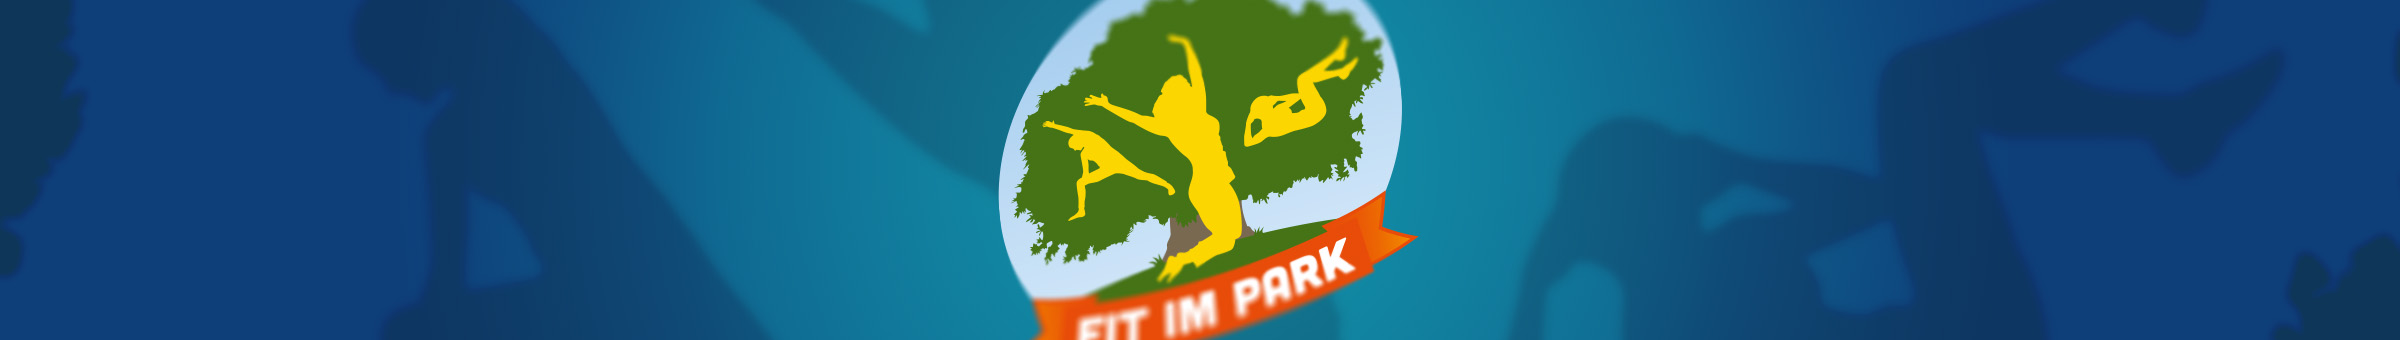 Fit im Park Logo